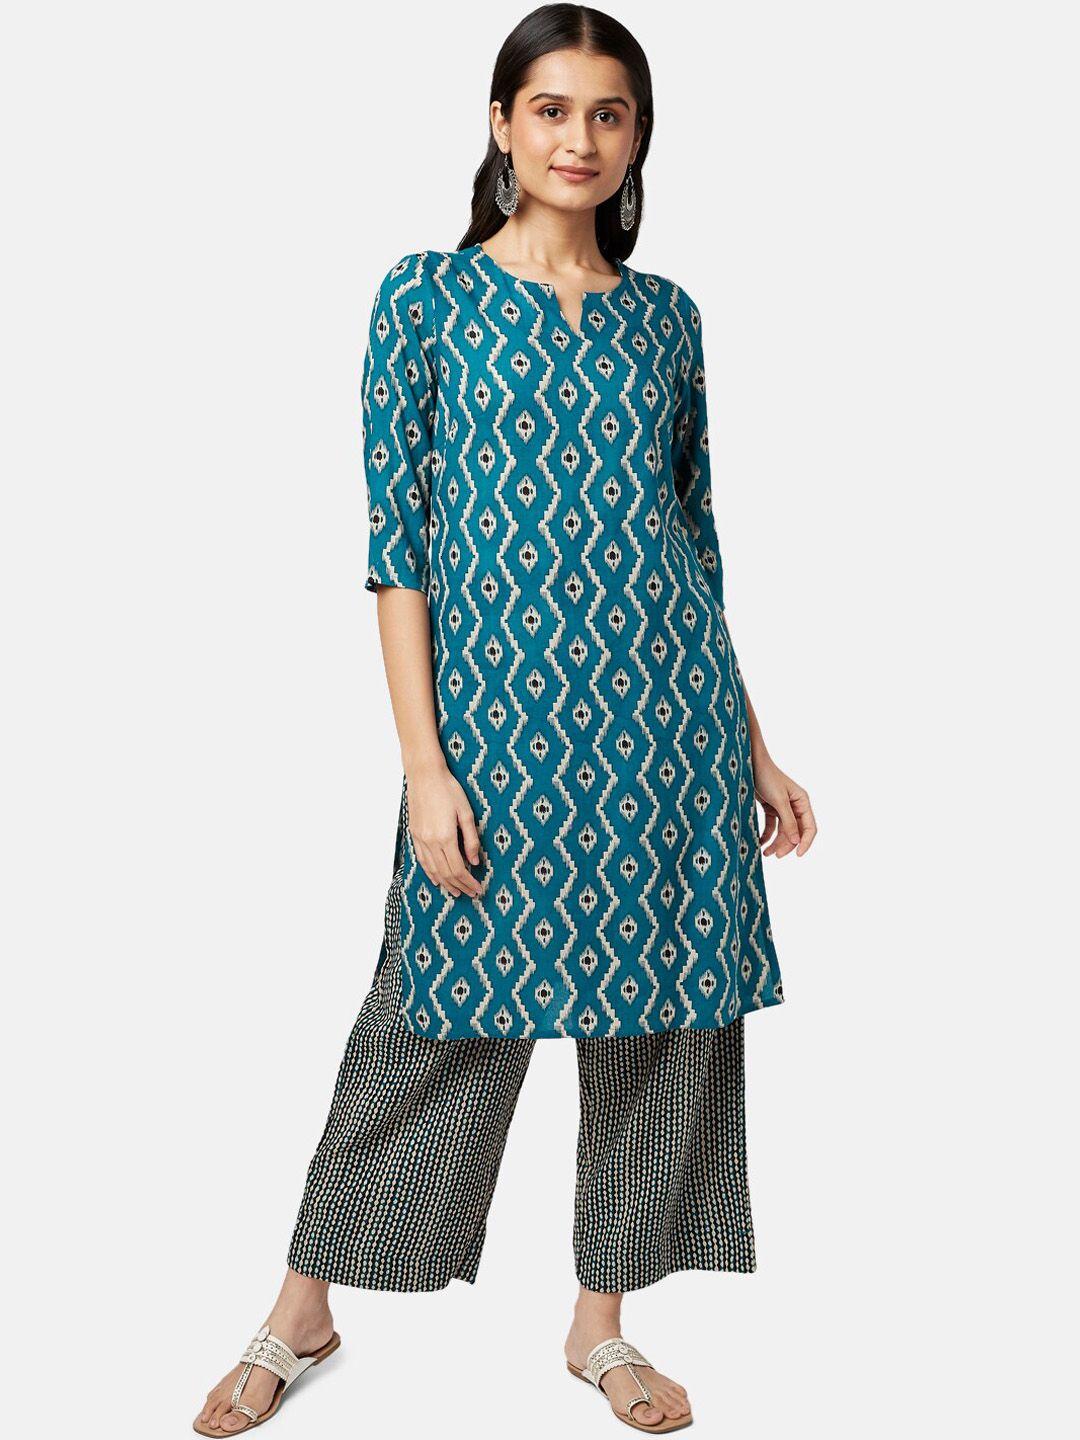 rangmanch by pantaloons women teal printed kurta with trousers